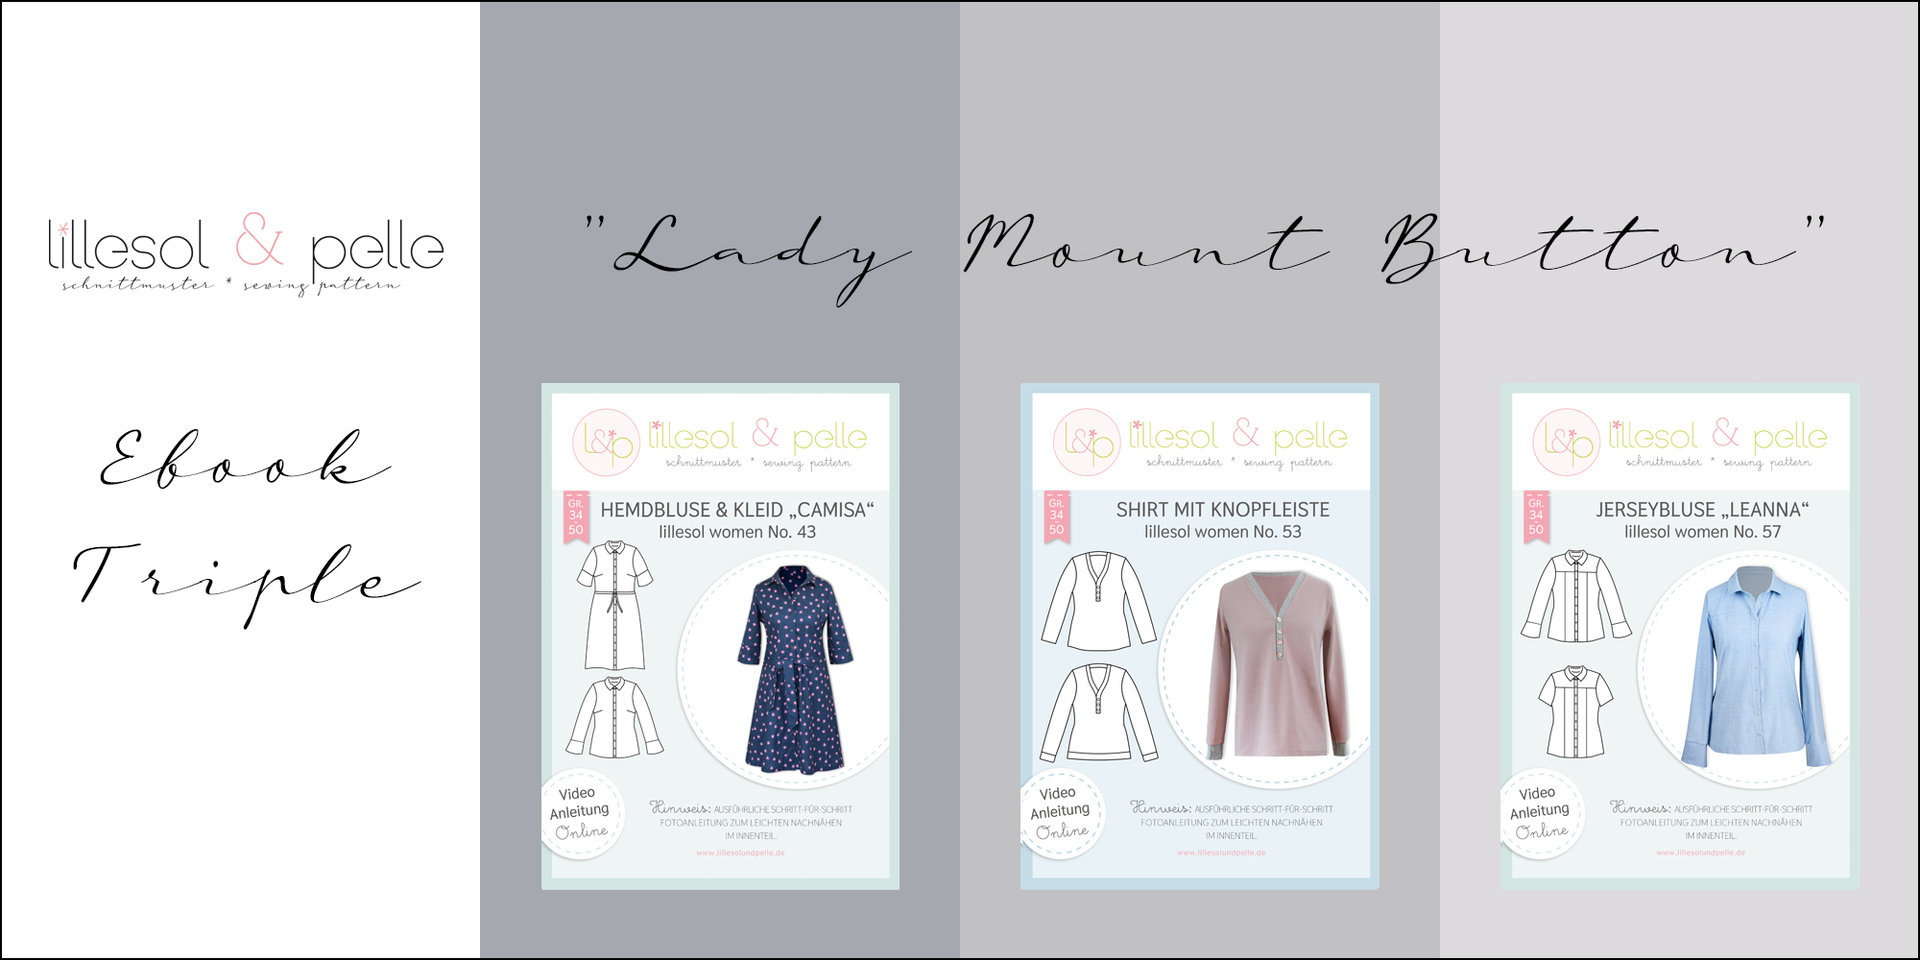 lillesol ebook triple Lady Mount Button: 3 Ebooks & 3 Goodies